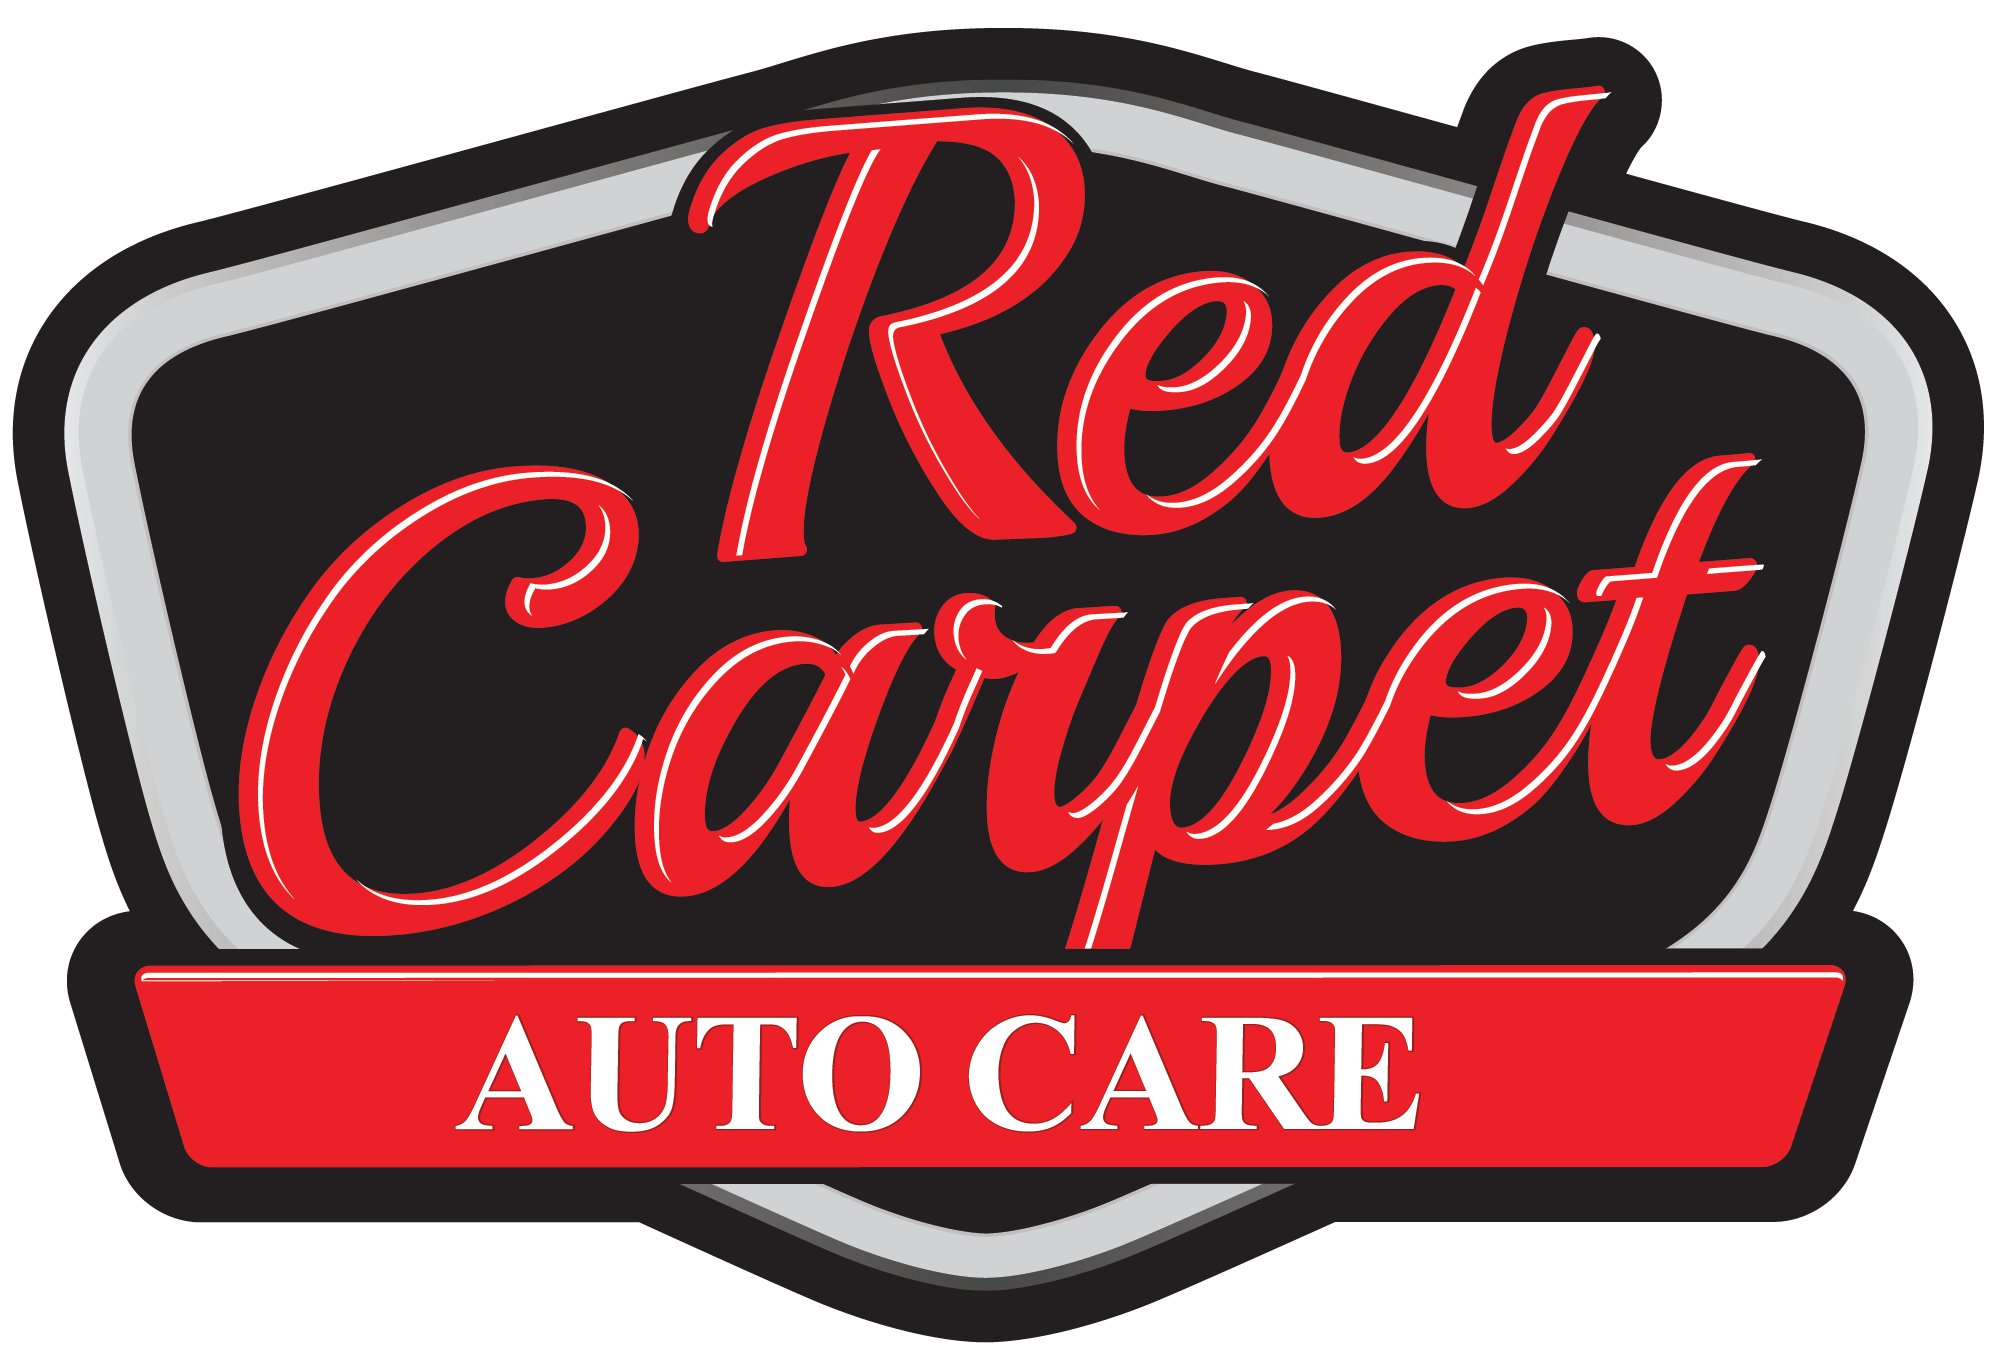 Red carpet auto care